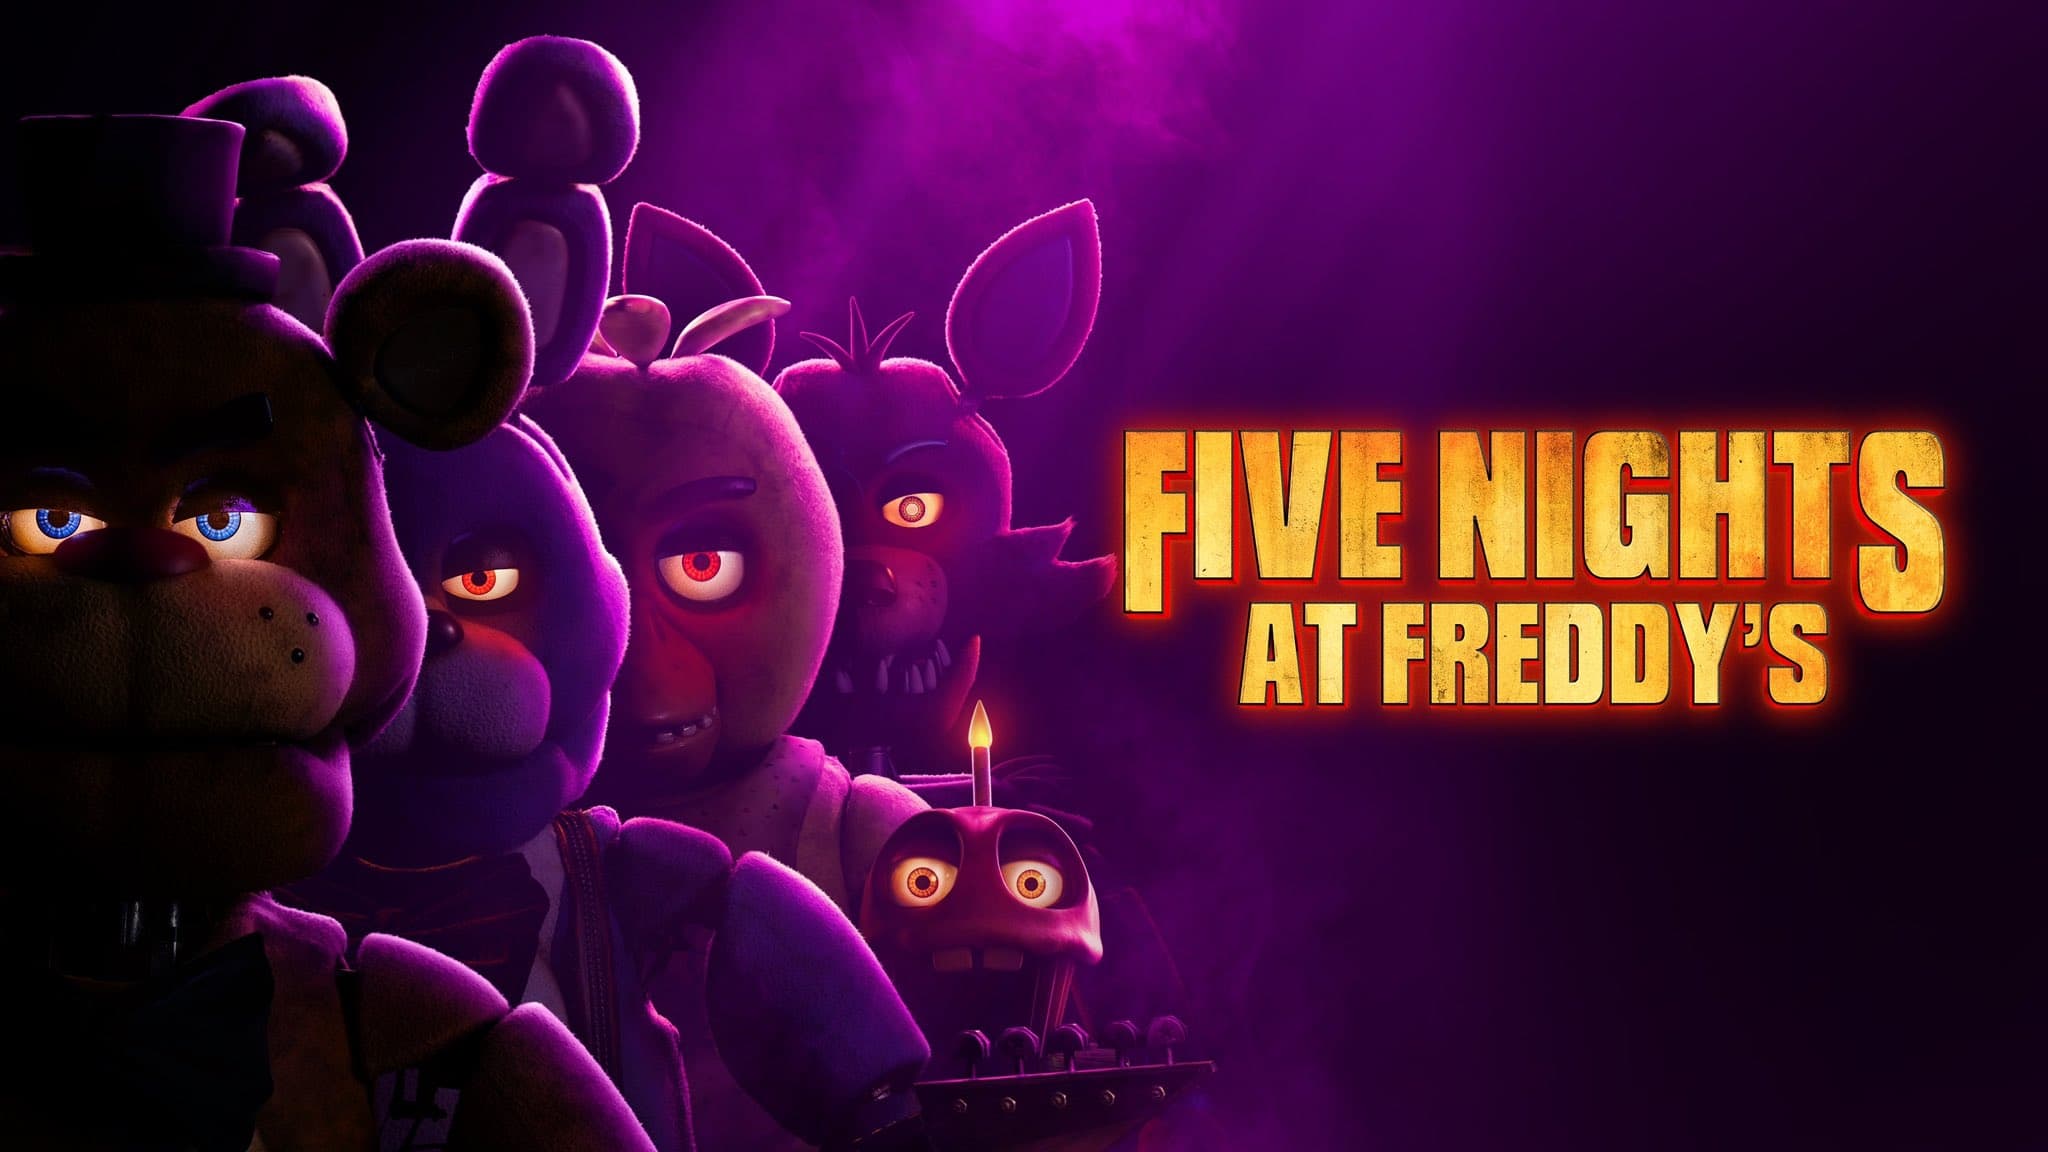 Five Nights at Freddy's - O Filme (2023)